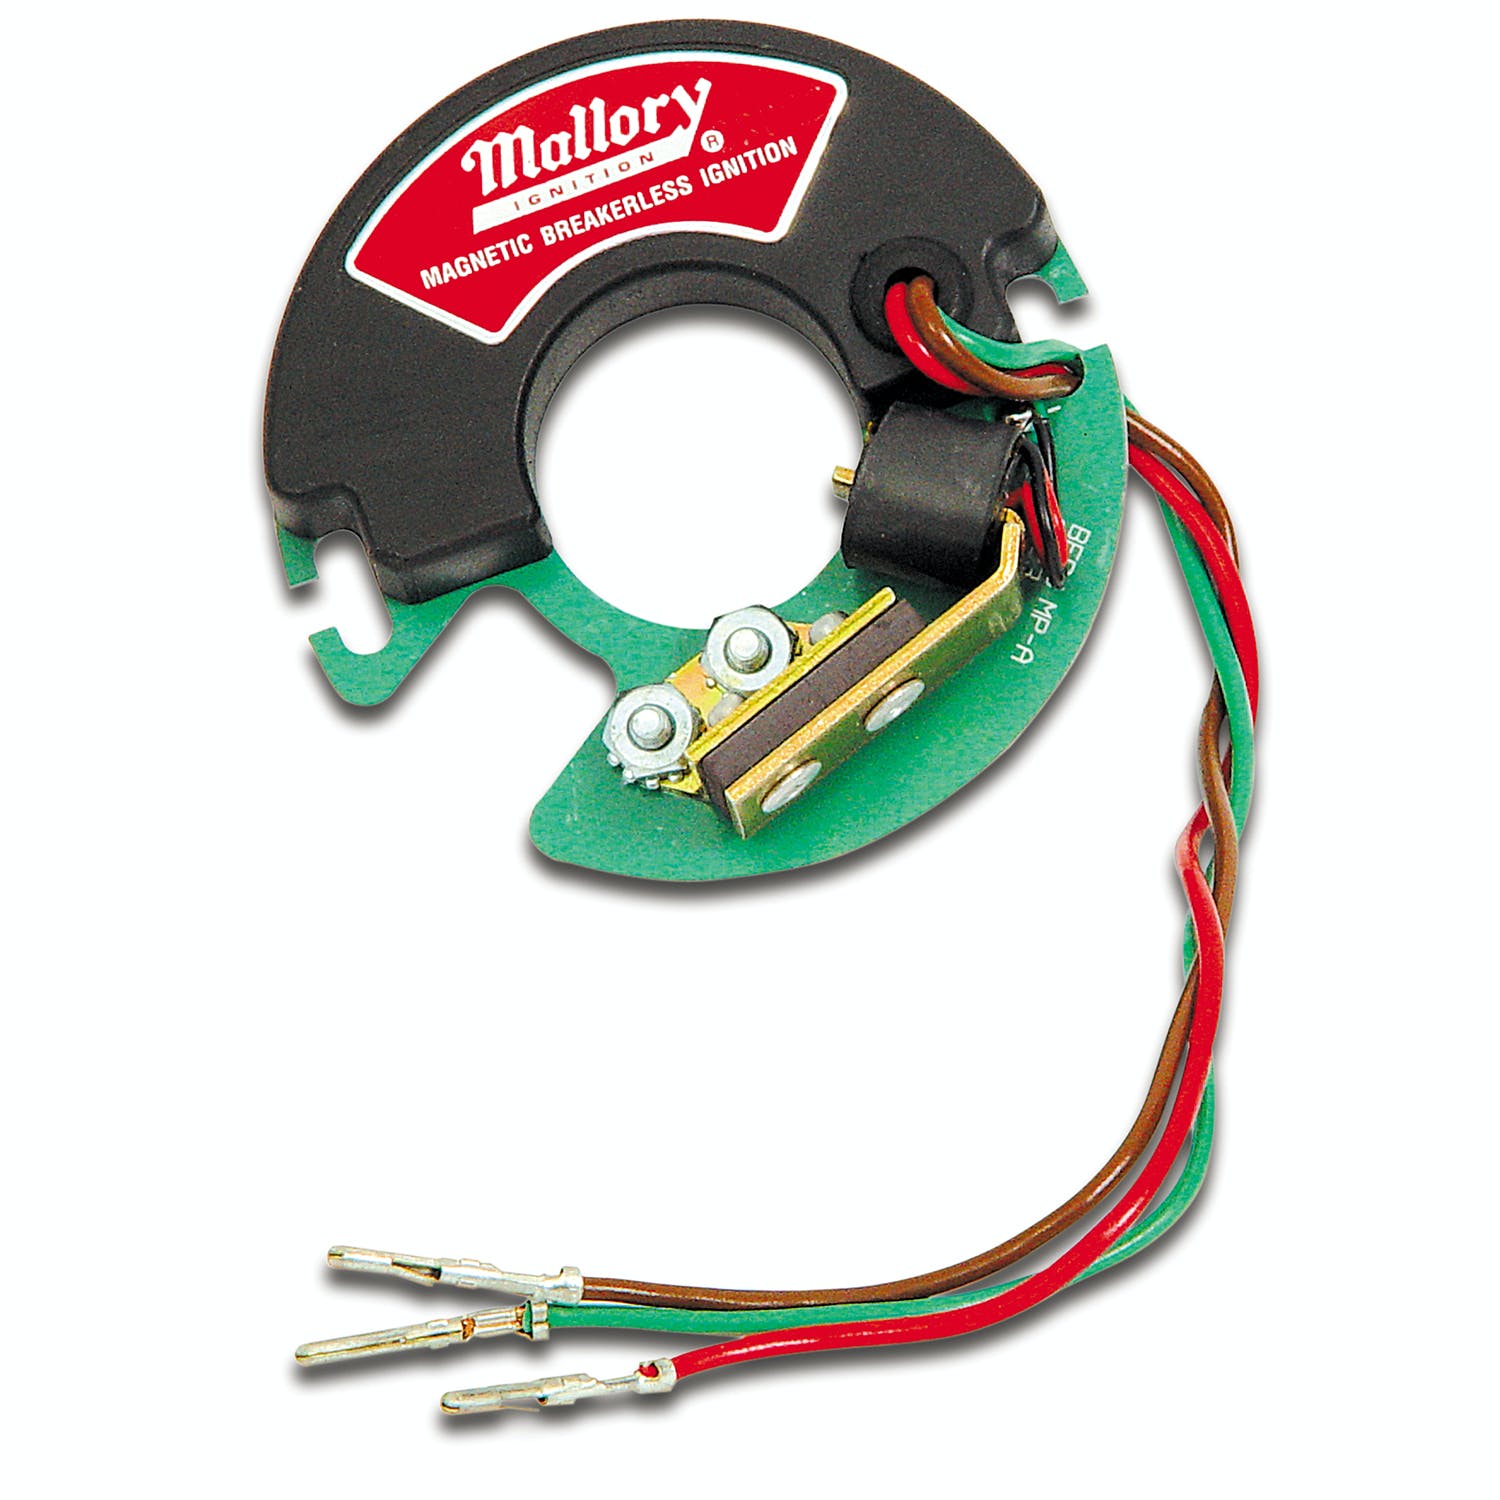 Mallory 609 Mallory Module, Magnetic Ignition